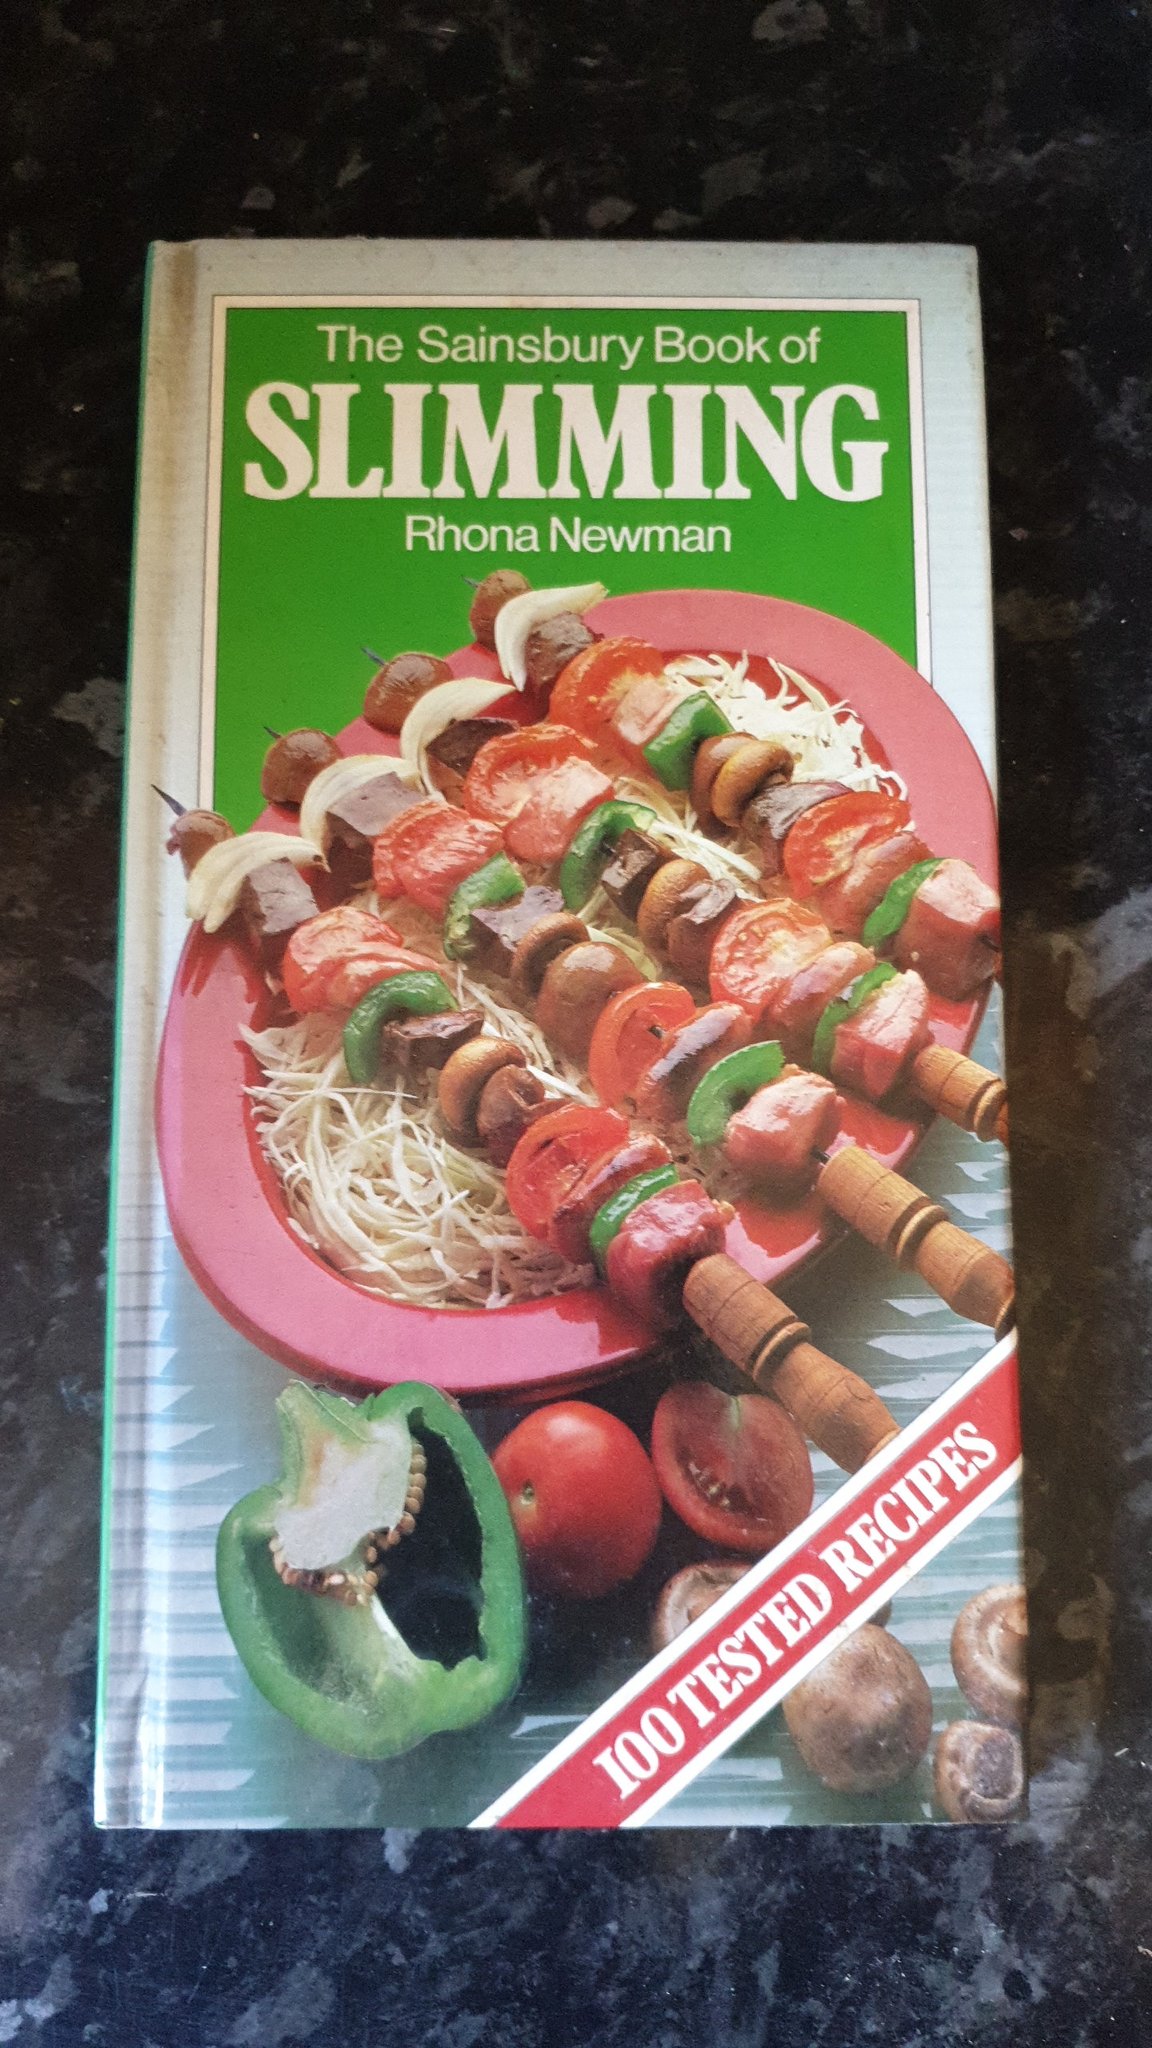 The Sainsbury Book of Slimming